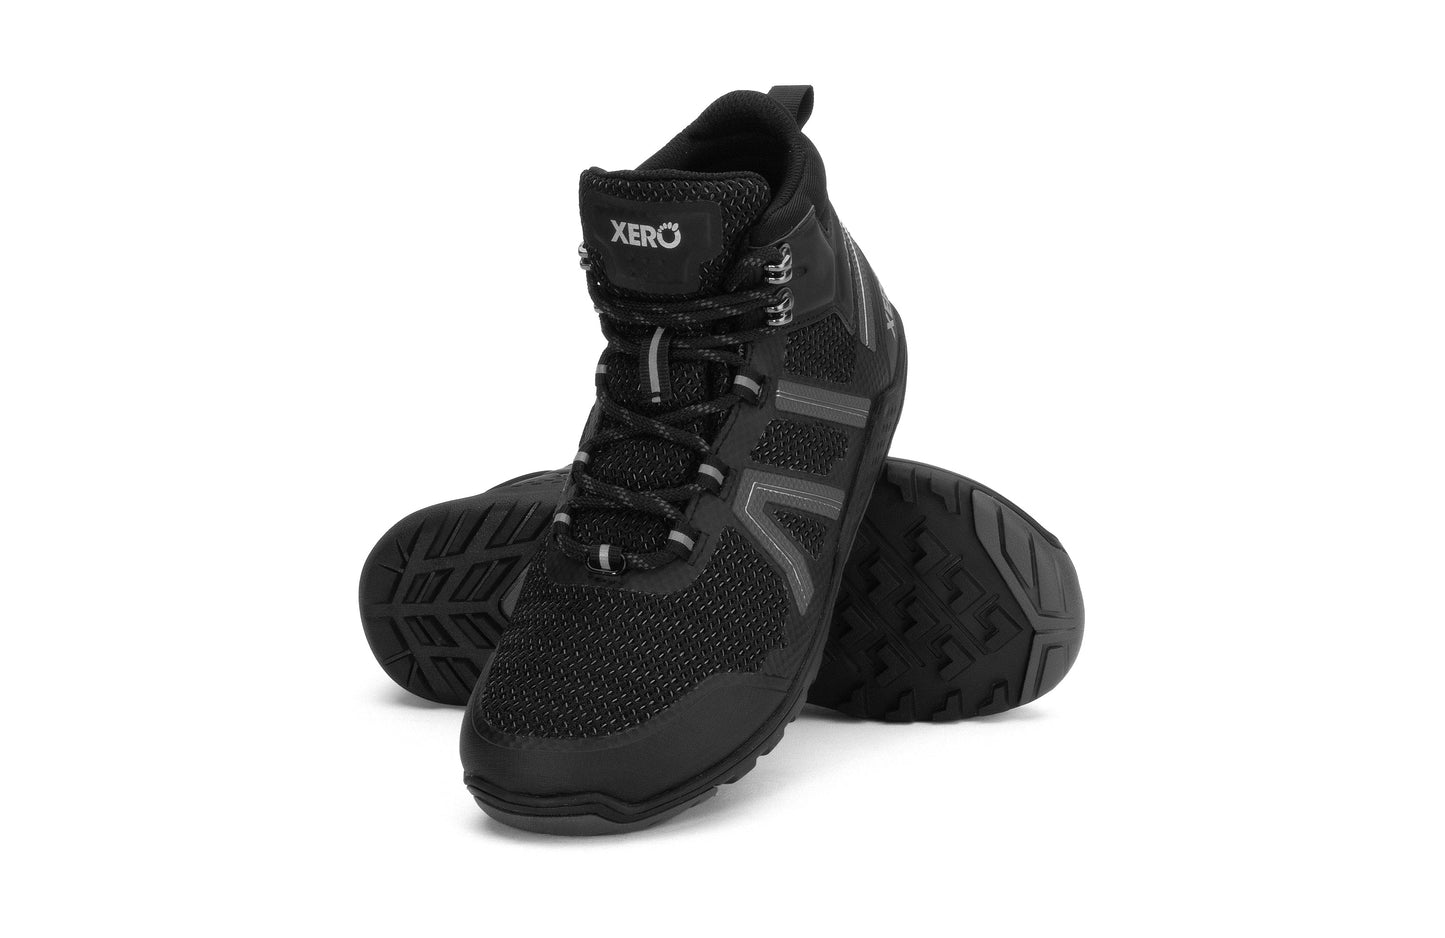 Xero Shoes Xcursion Fusion Womens barfods vandrestøvler til kvinder i farven black titanium, par